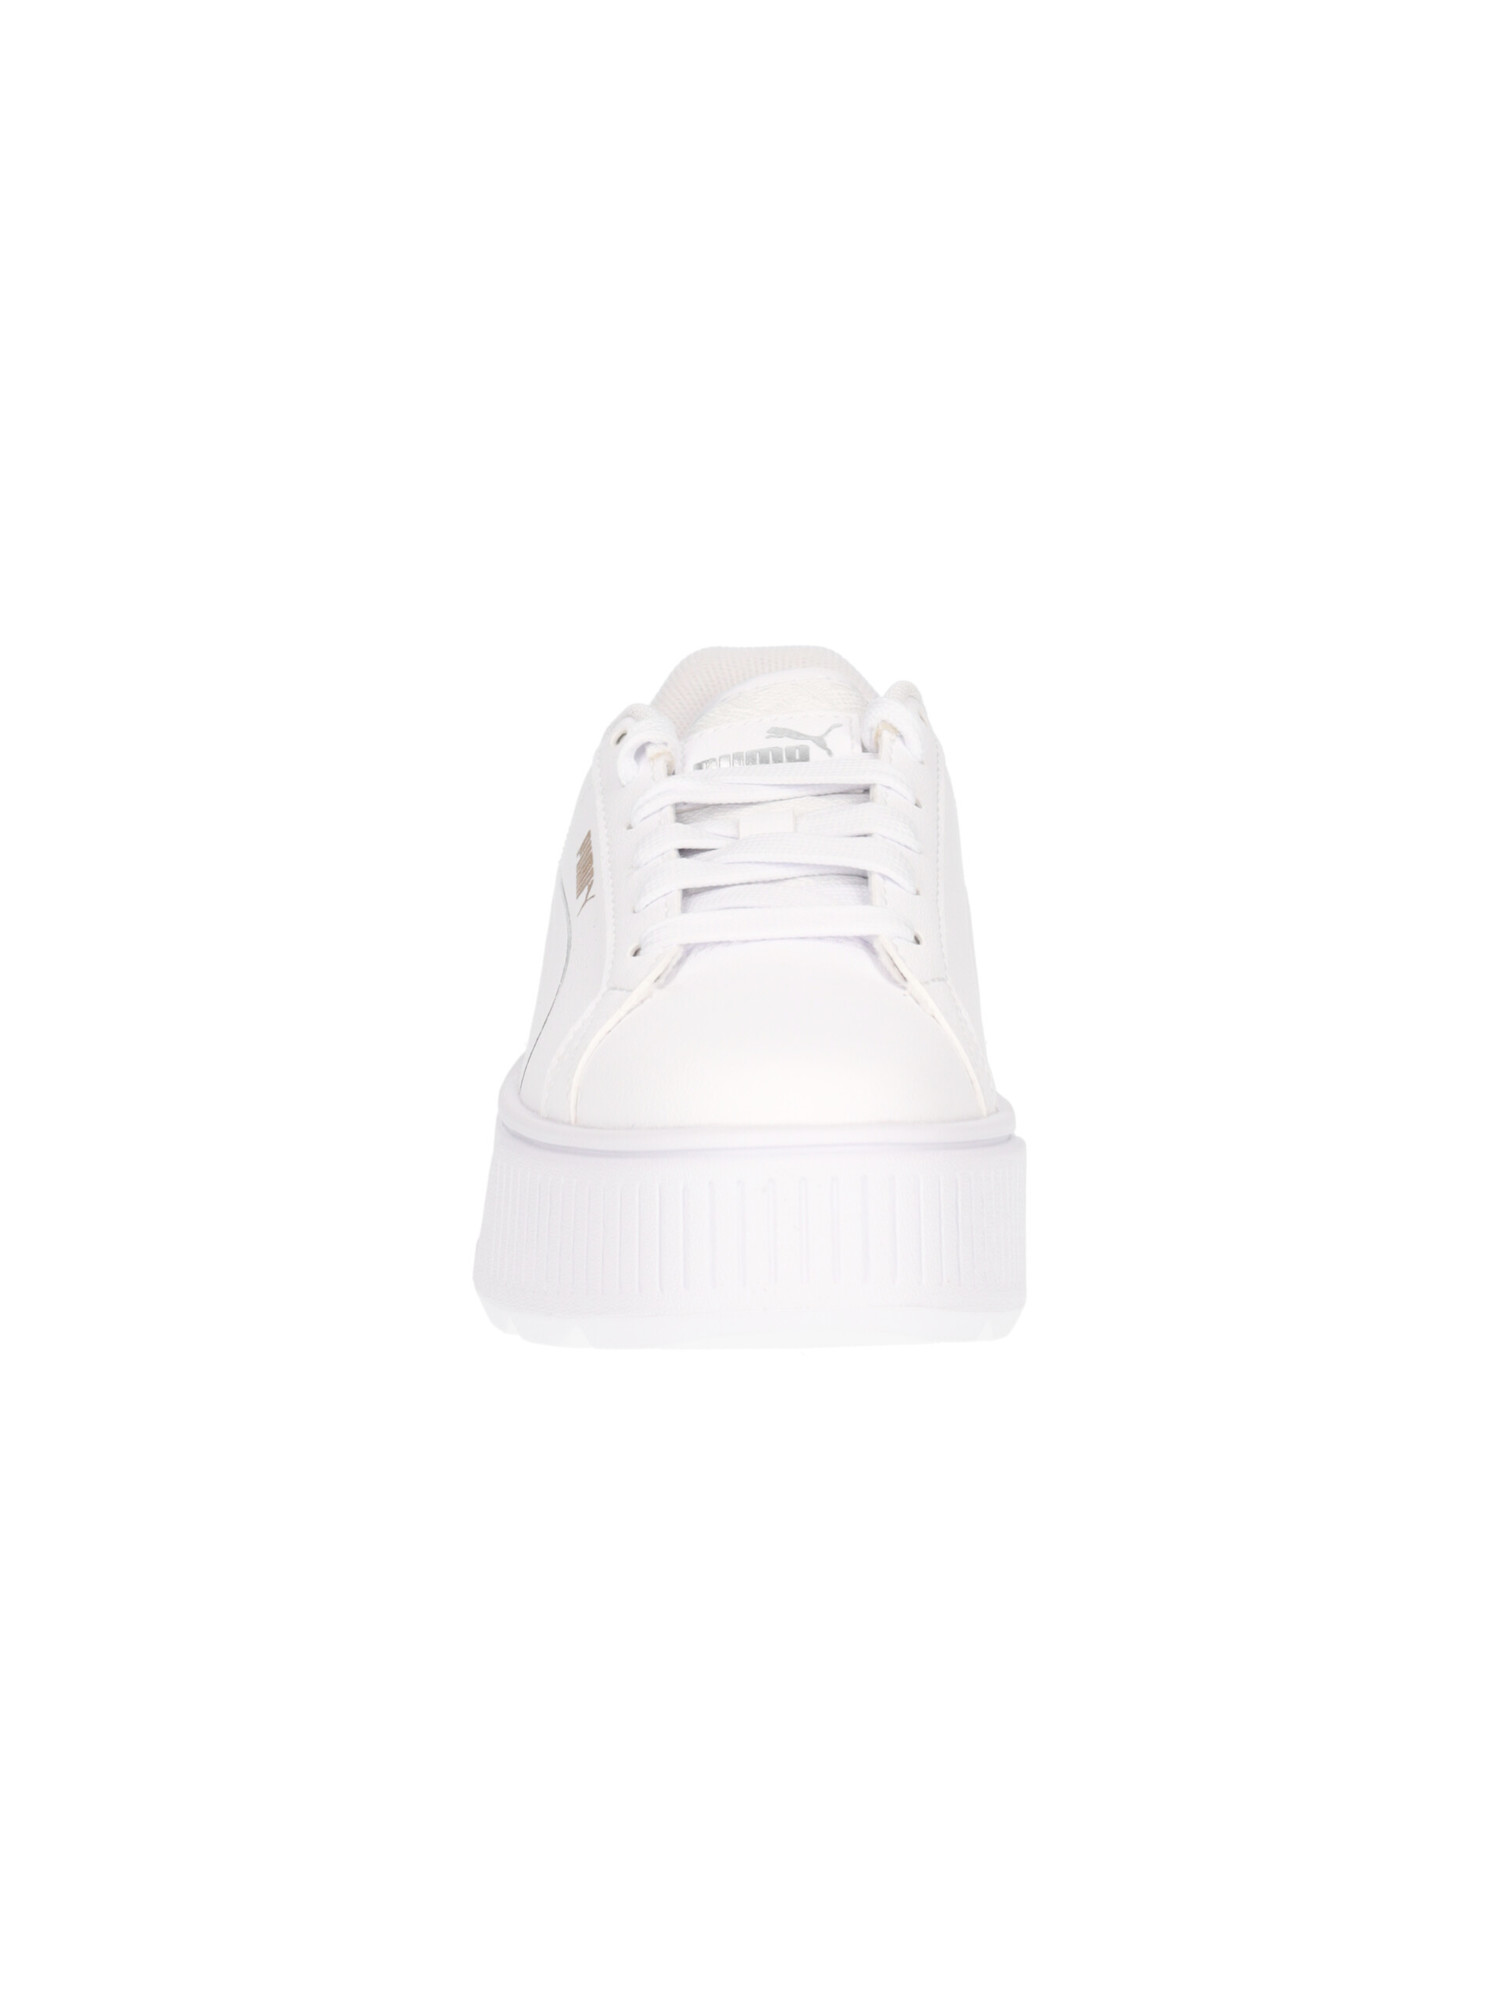 sneaker-platform-puma-karmen-da-donna-bianca-3094c3